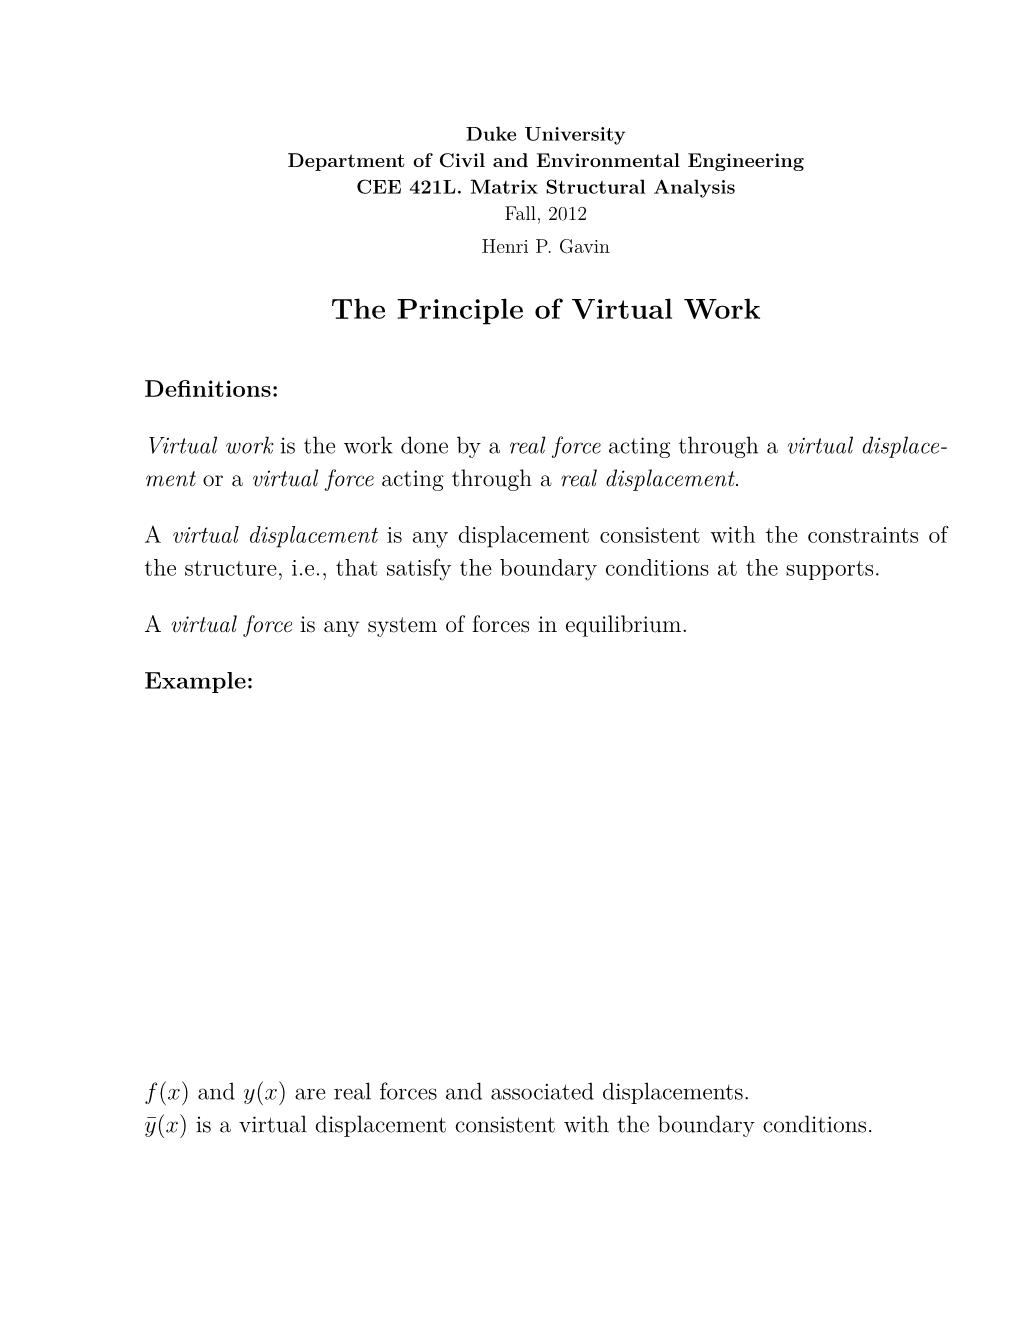 The Principle of Virtual Work